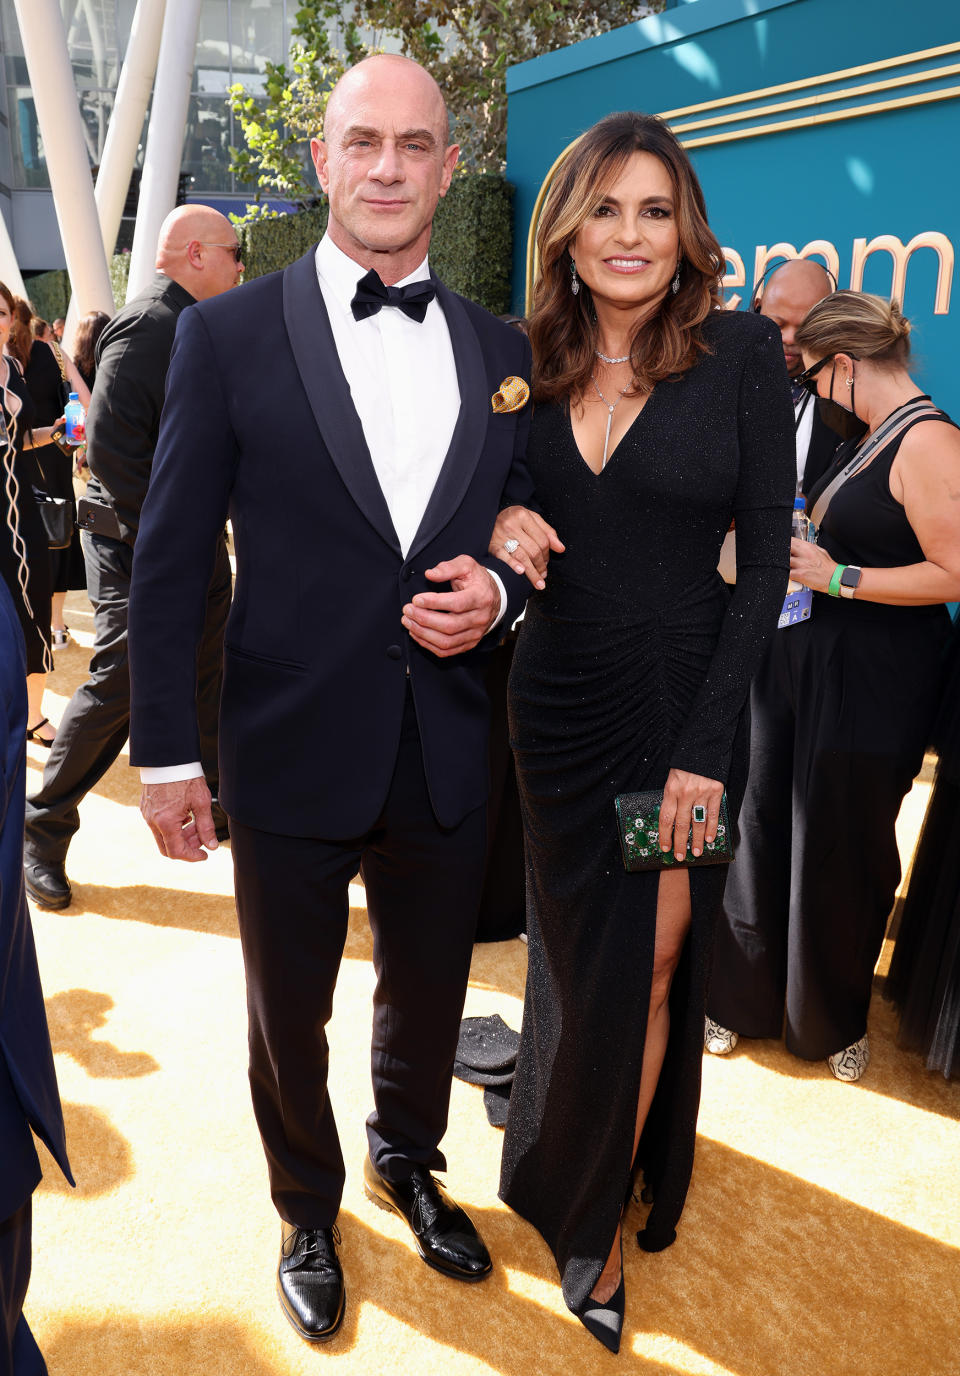 Chris Meloni and Mariska Hargitay (Mark Von Holden/NBCUniversal / NBC via Getty Images)